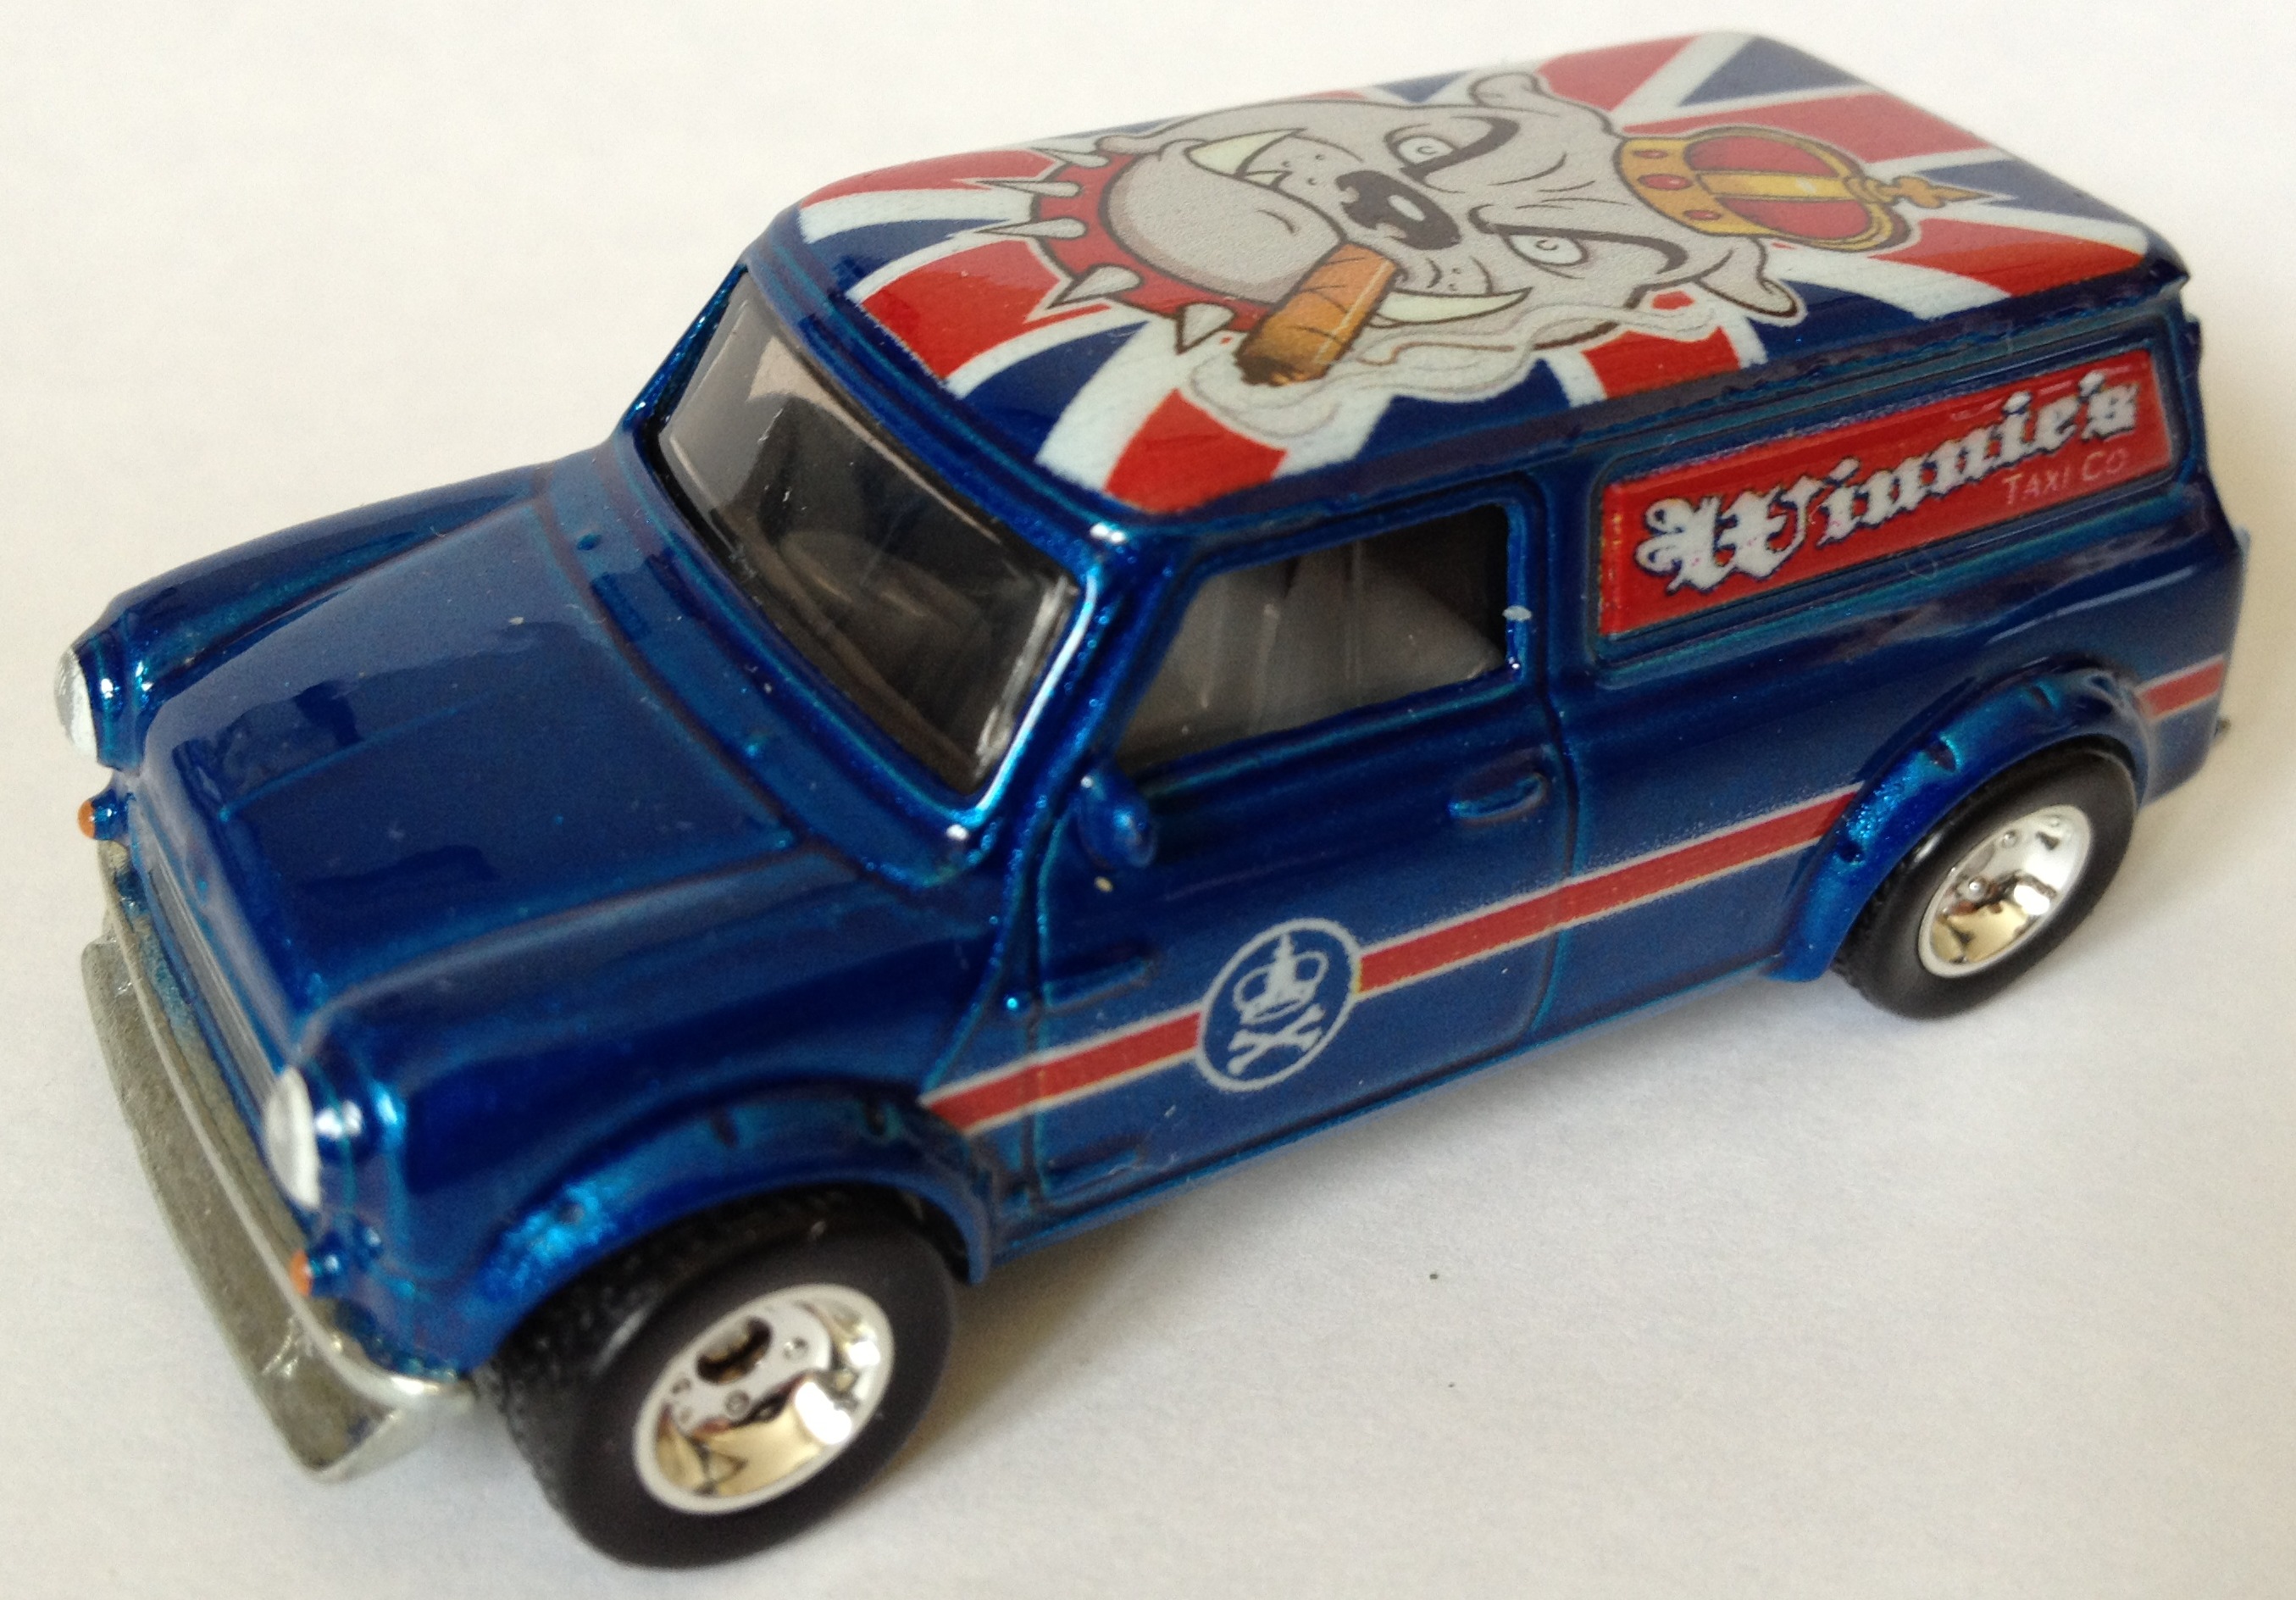 67 Austin Mini Van Hot Wheels Wiki Fandom